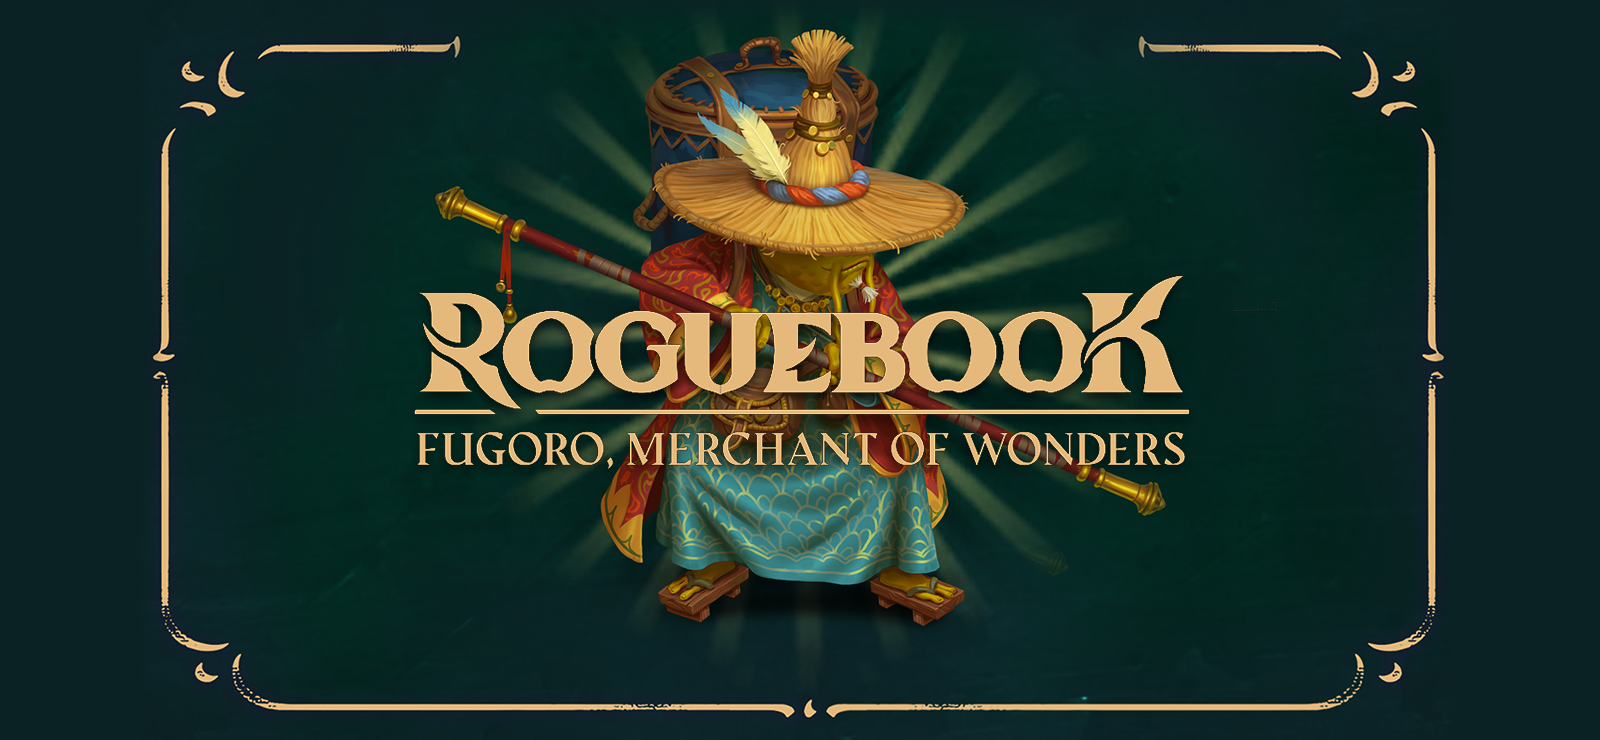 Roguebook - Fugoro, Merchant Of Wonders